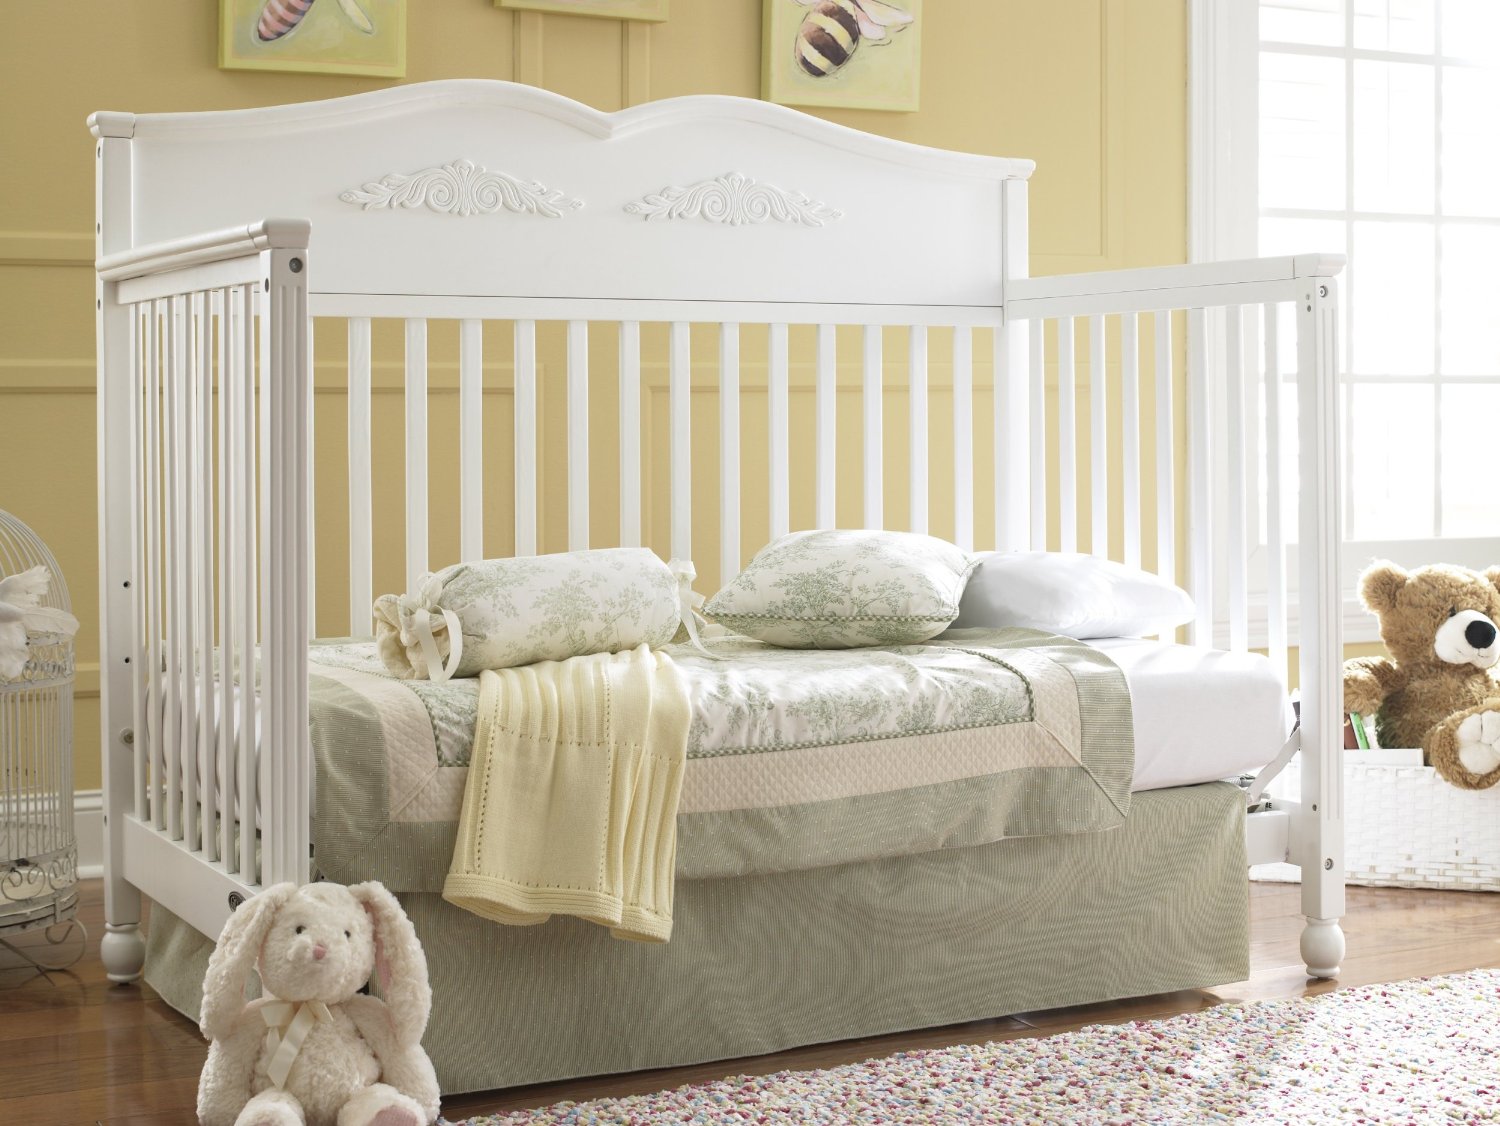 Nursery Furniture Sets - Baby Room Theme